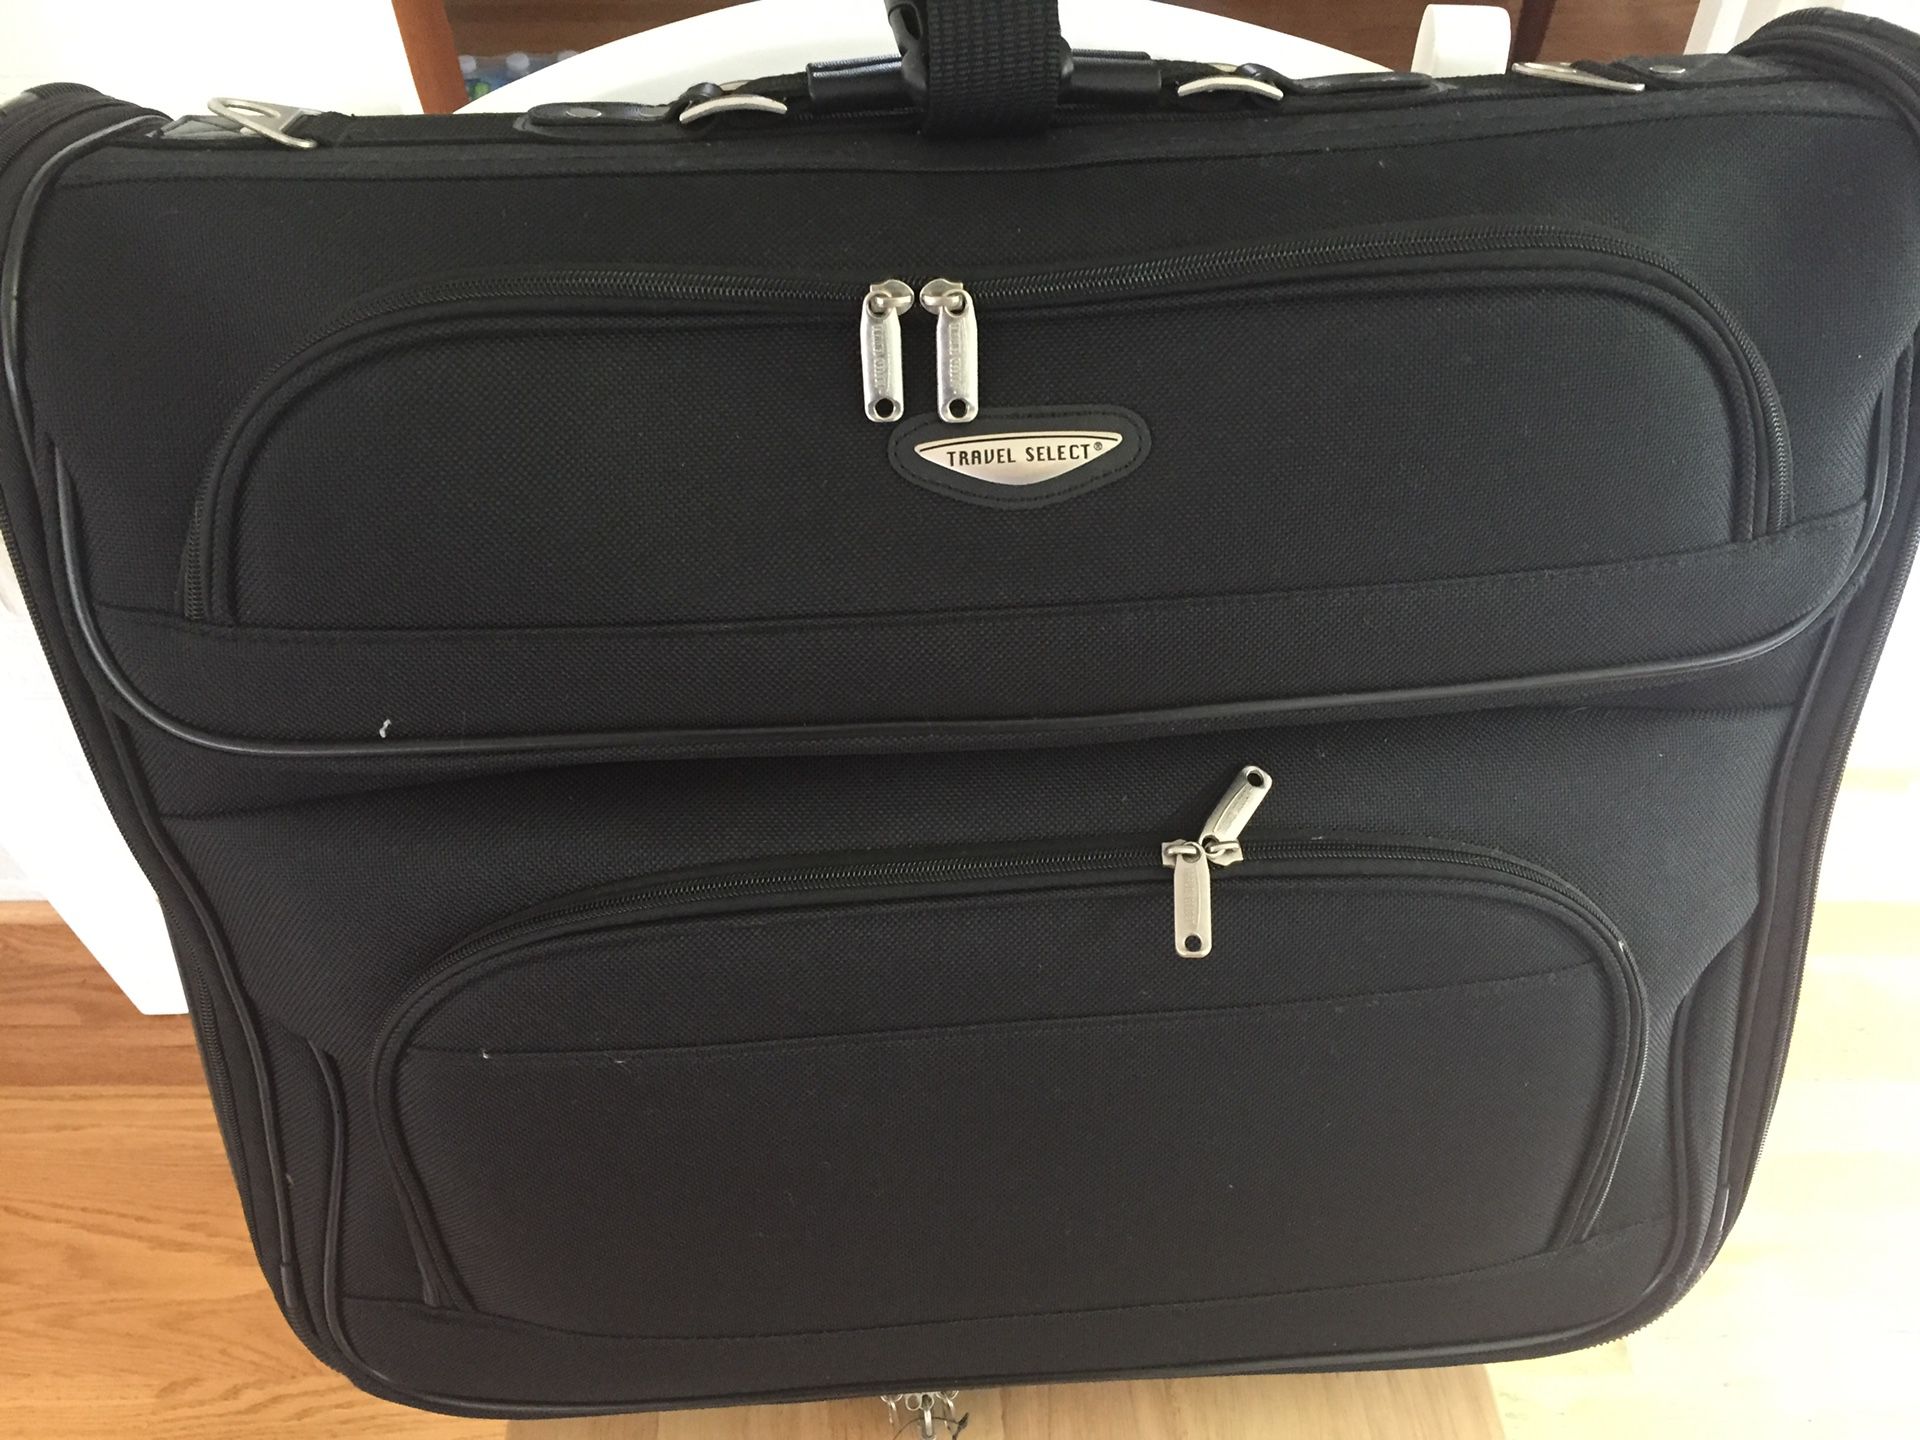 Travel Select Rolling Garment Bag, Black